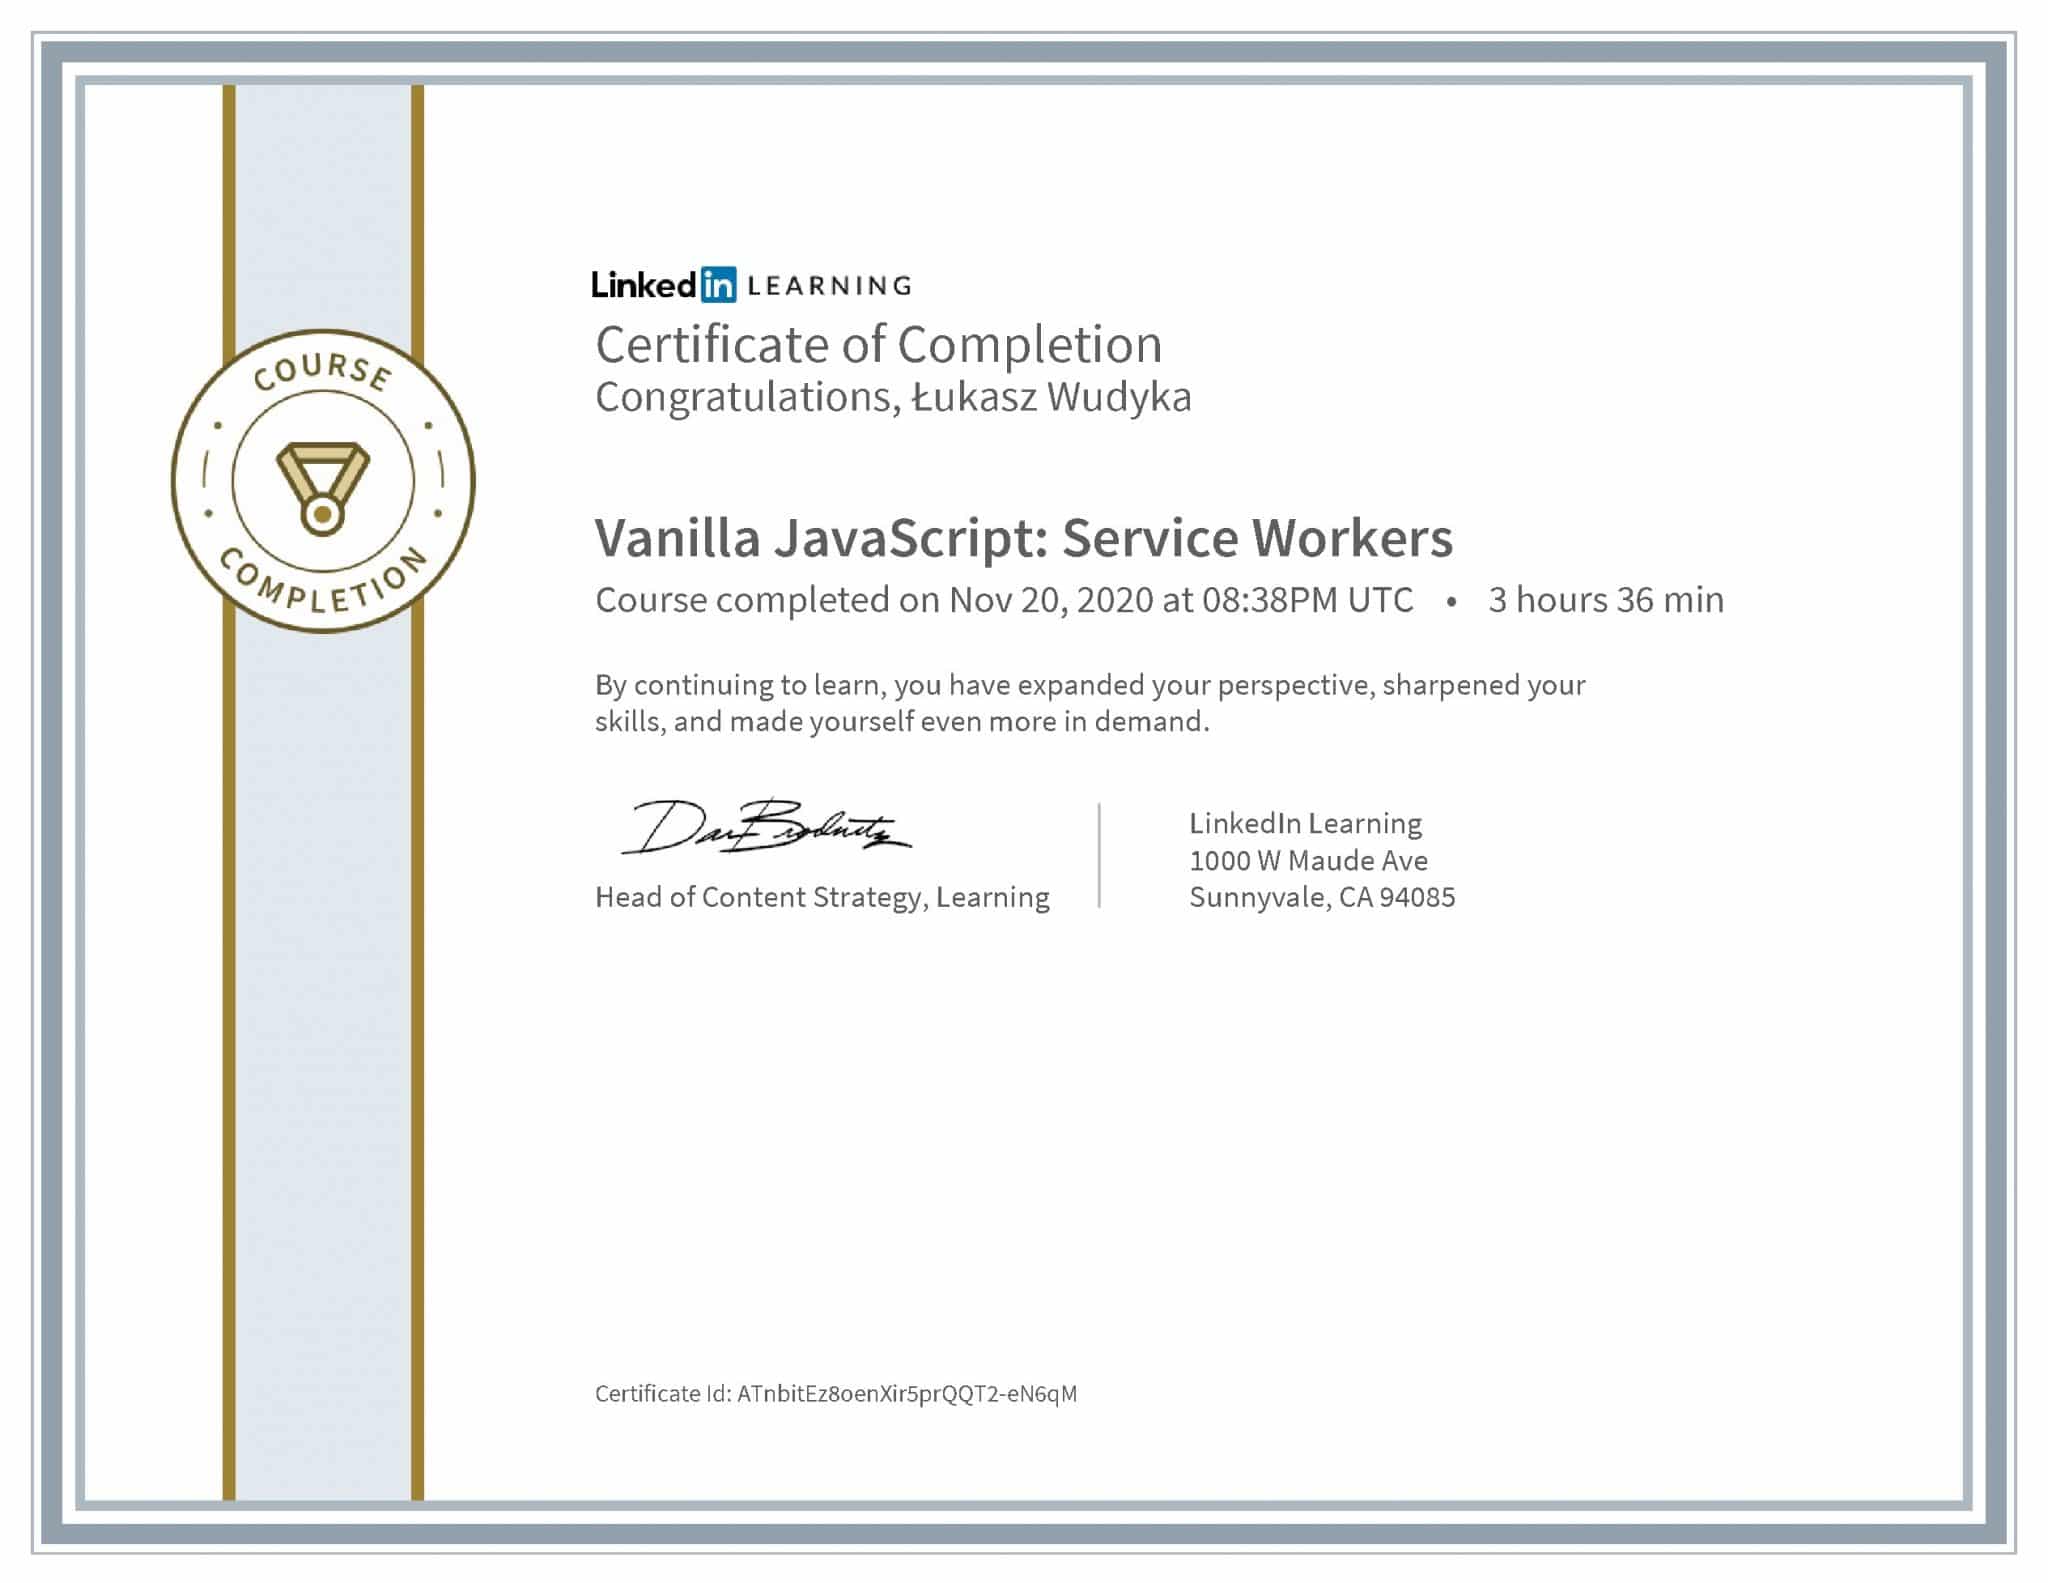 Łukasz Wudyka certyfikat LinkedIn Vanilla JavaScript: Service Workers